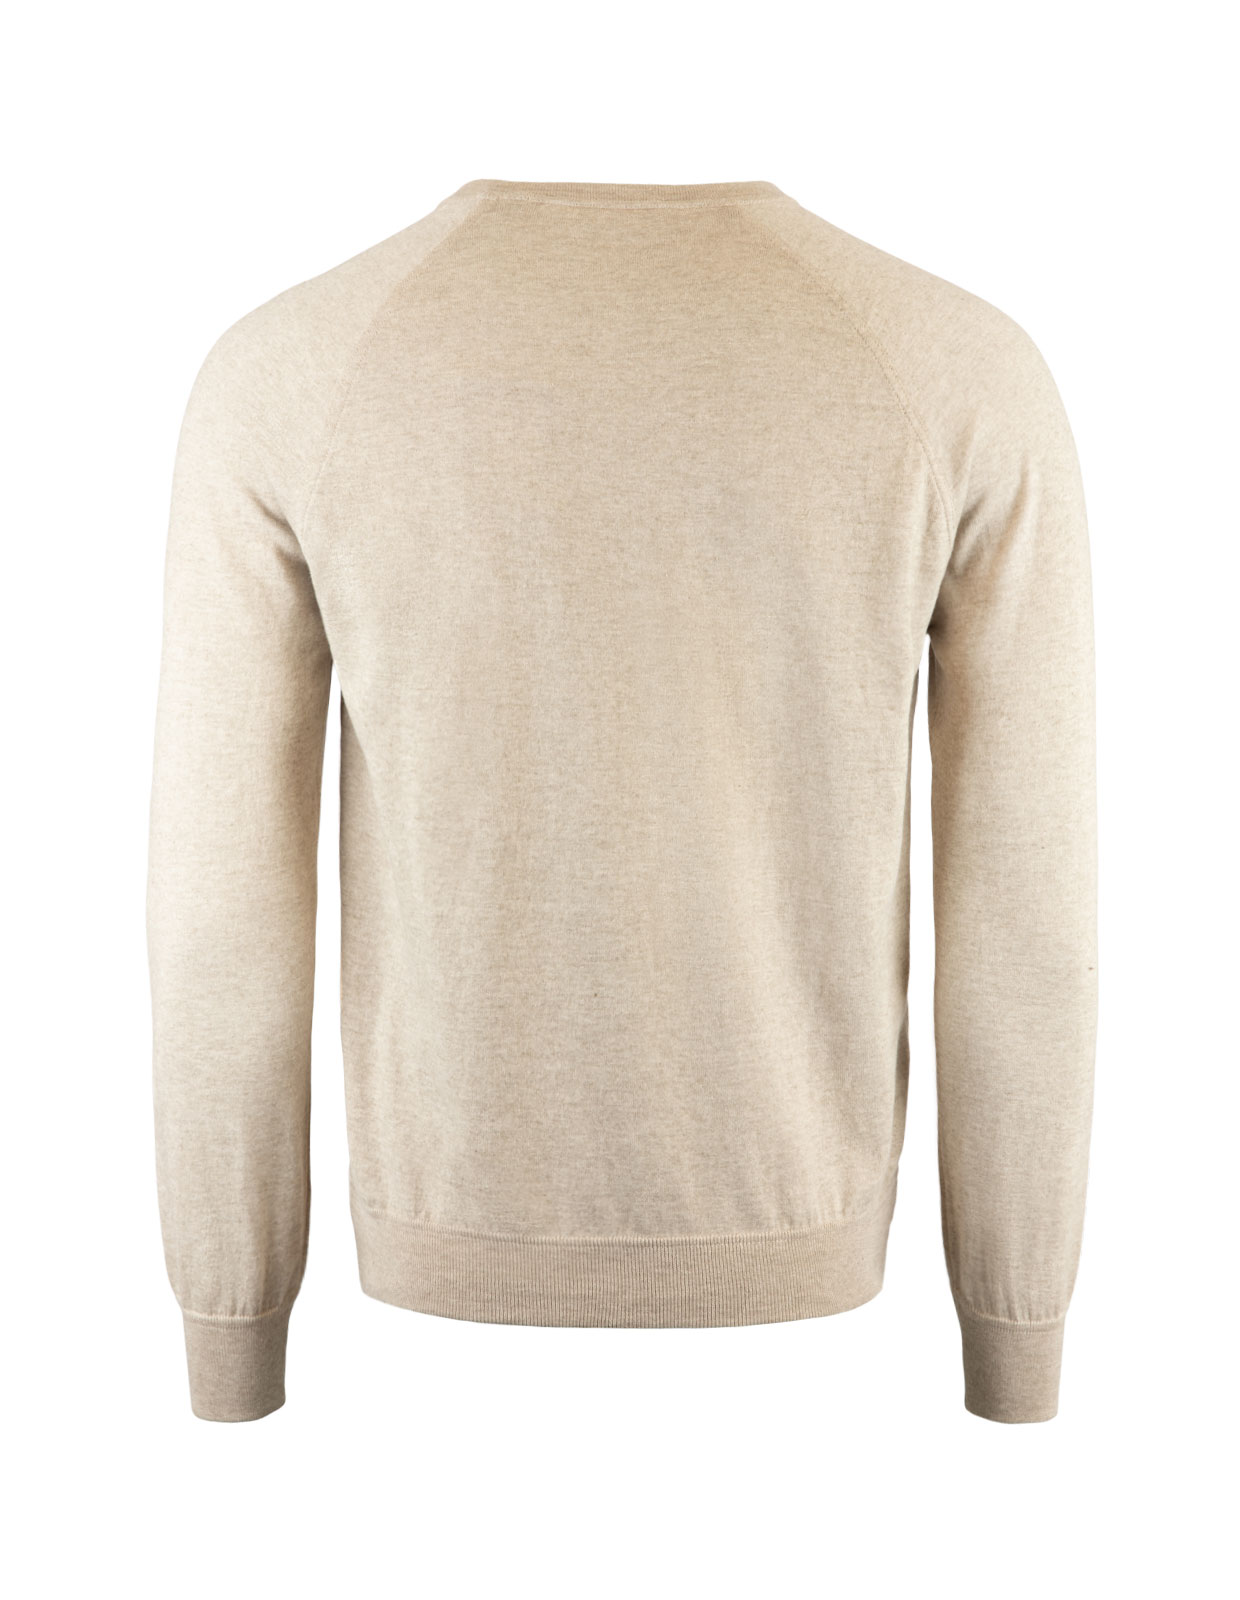 College Sweater Cotton Cashmere Light Beige